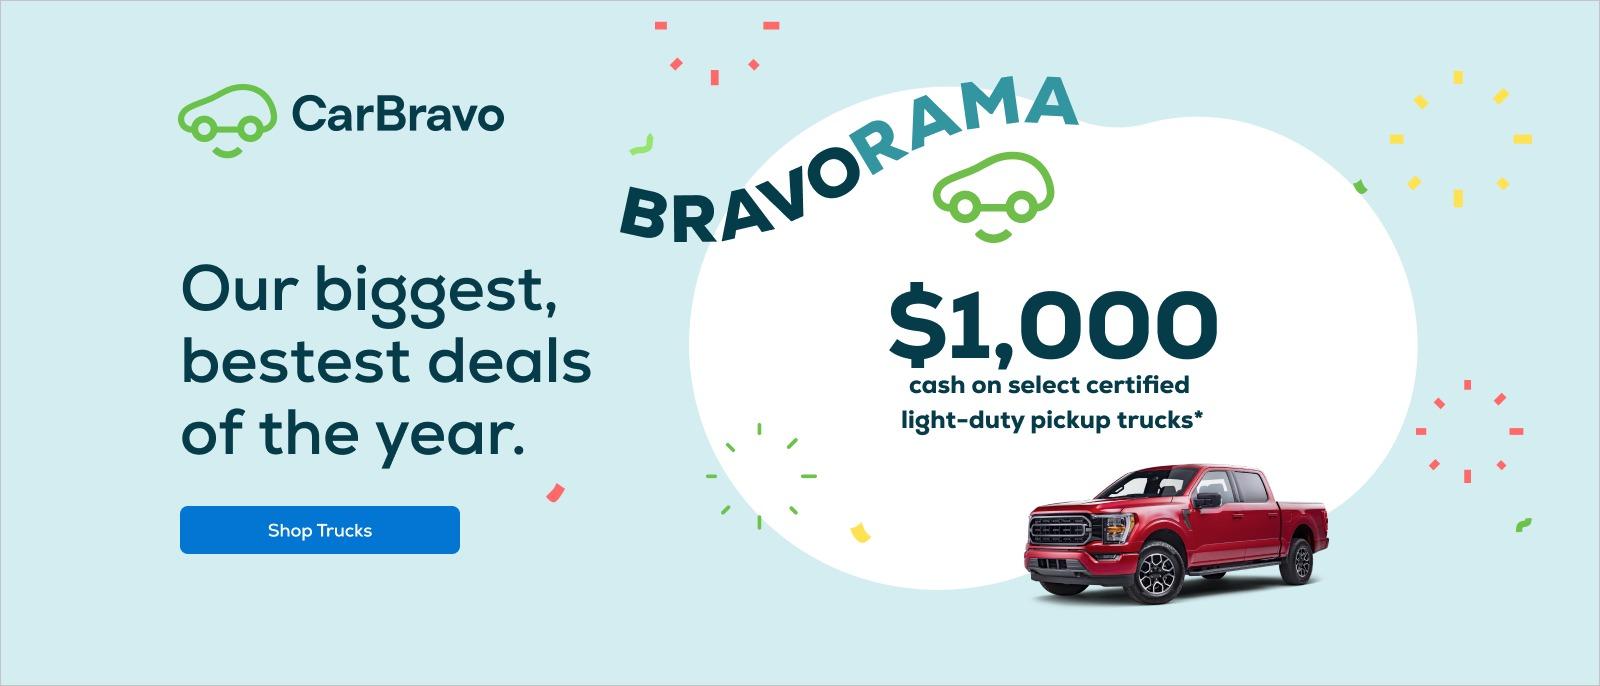 Bravorama $1,000 cash on select certified light-duty pickup trucks*